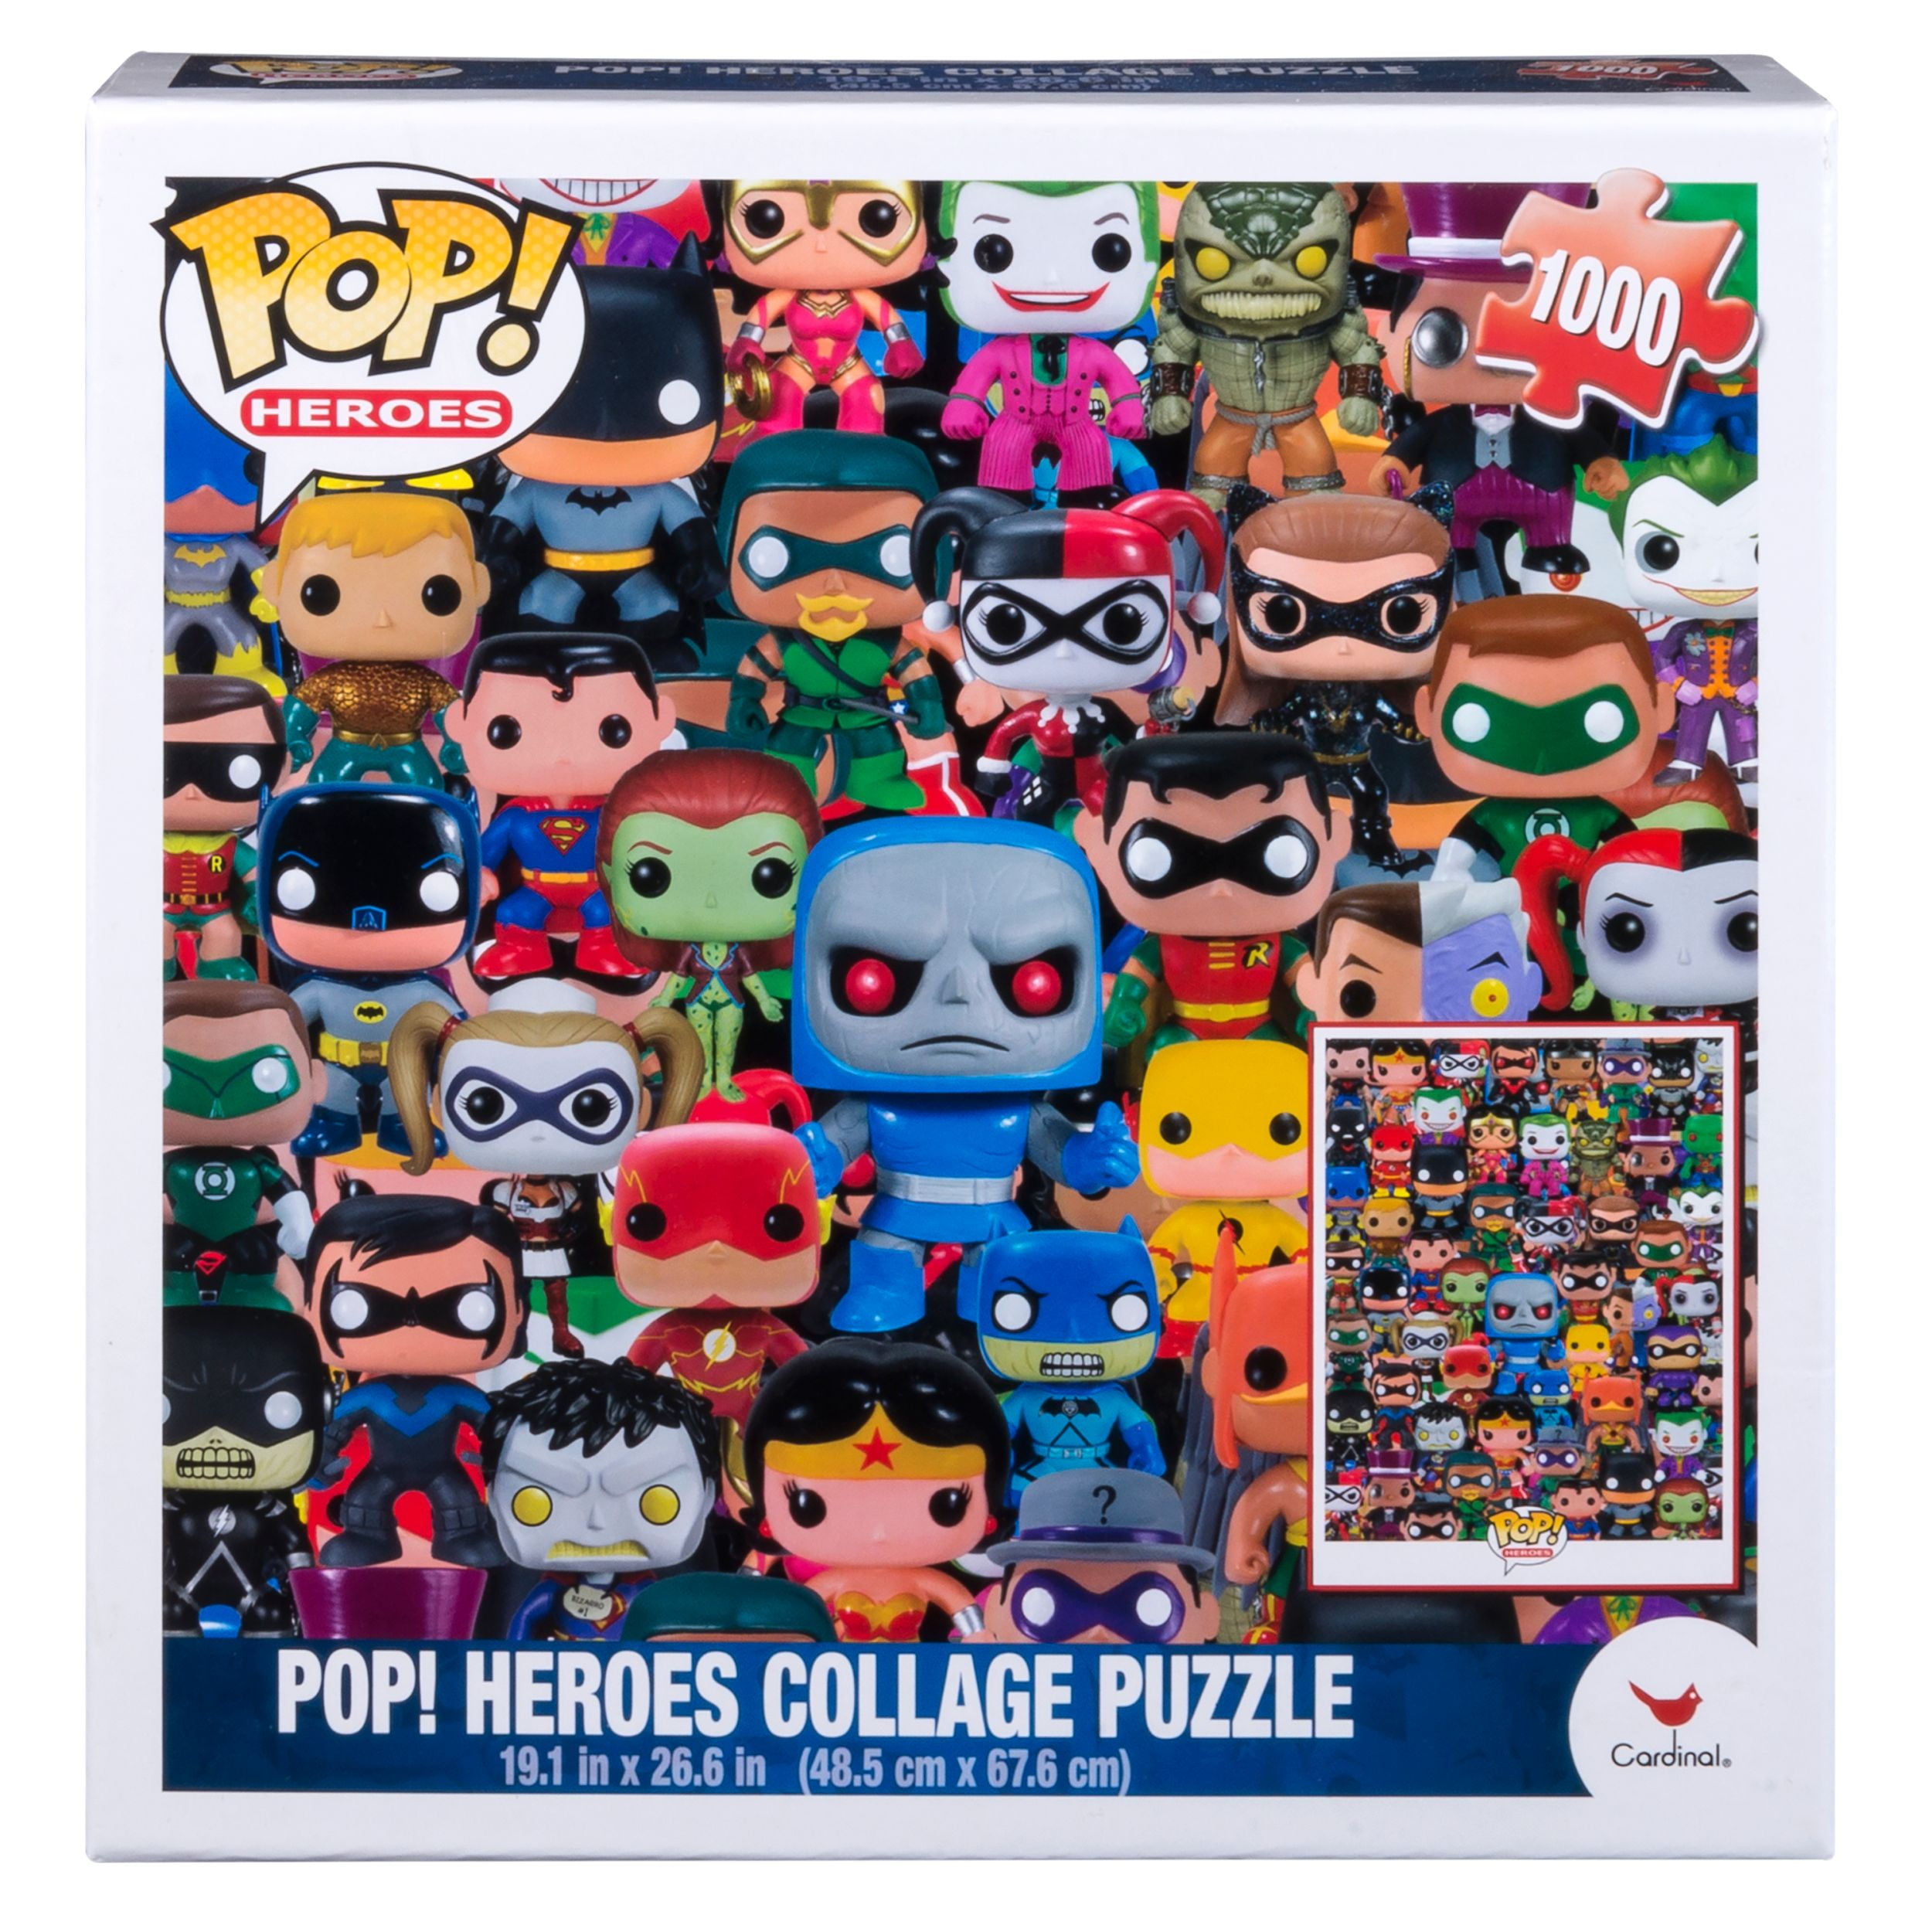 Funko Pop Star Wars Collage 1000 Piece Jigsaw Puzzle Cardinal 19x26 for sale online